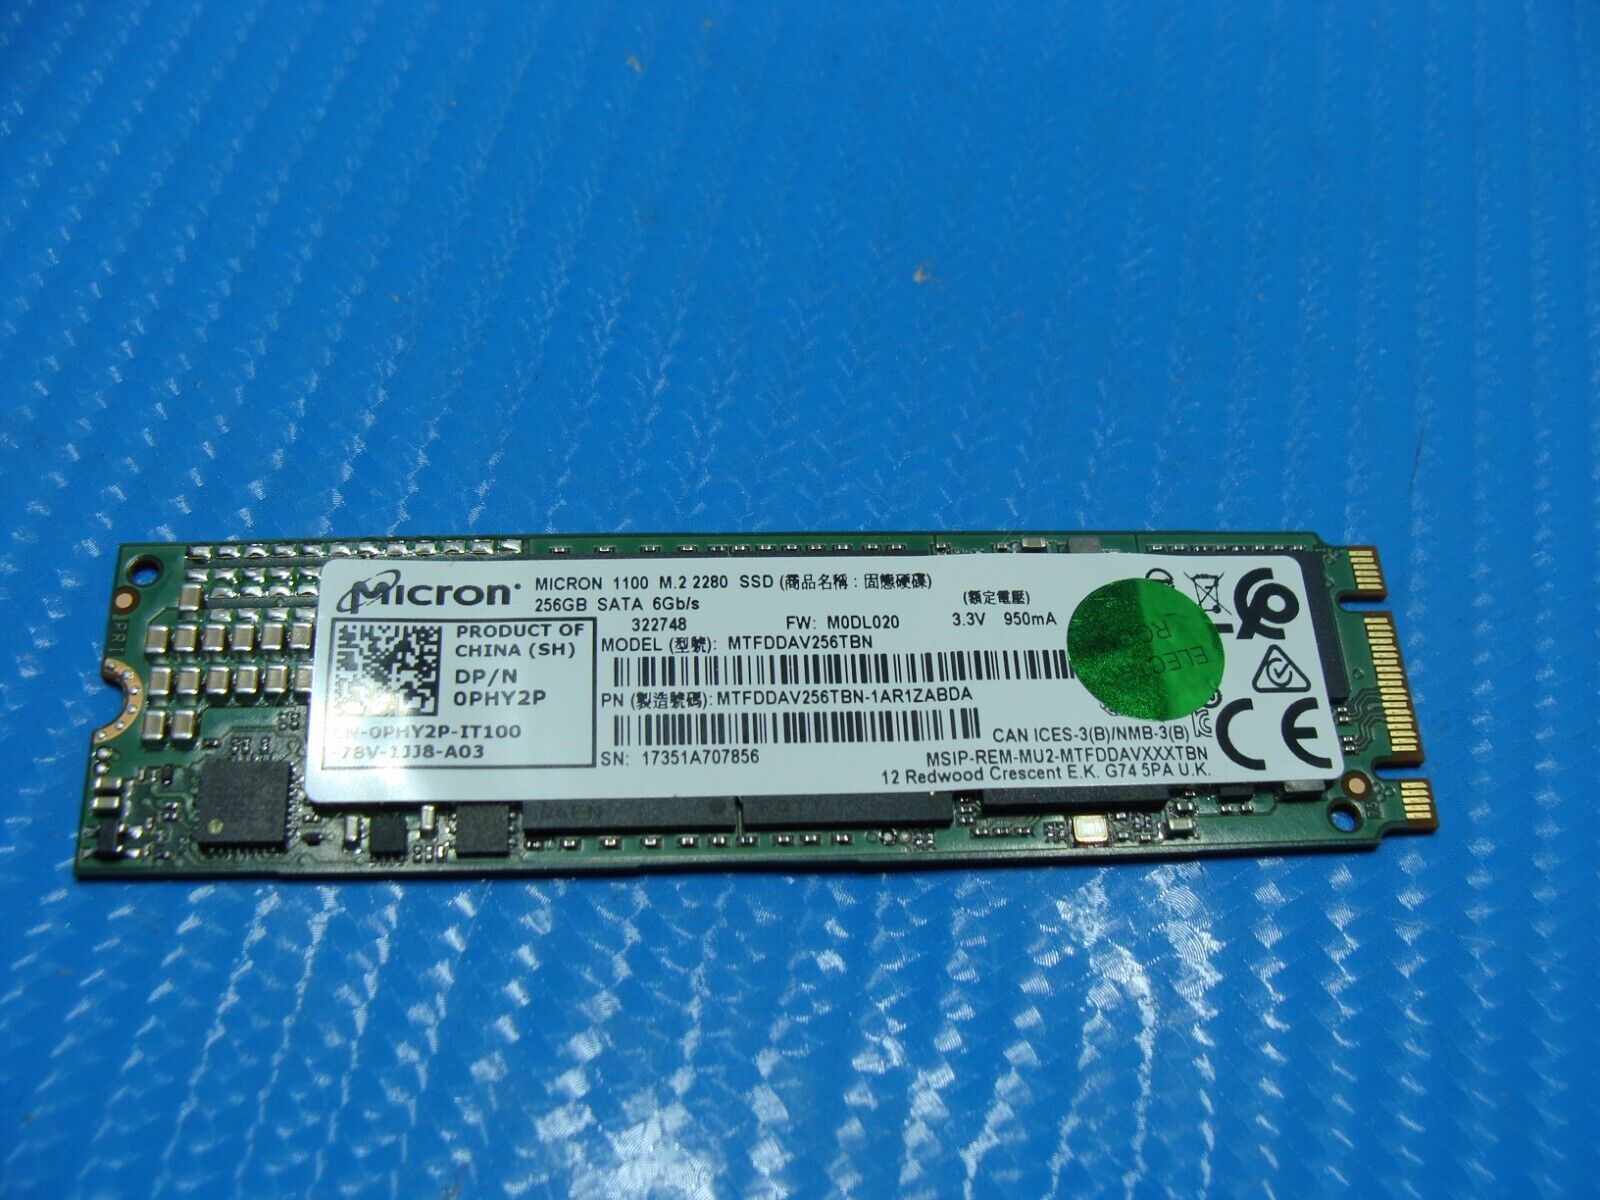 Dell 7480 Micron 256GB SATA M.2 SSD Solid State Drive MTFDDAV256TBN-1AR1ZABDA